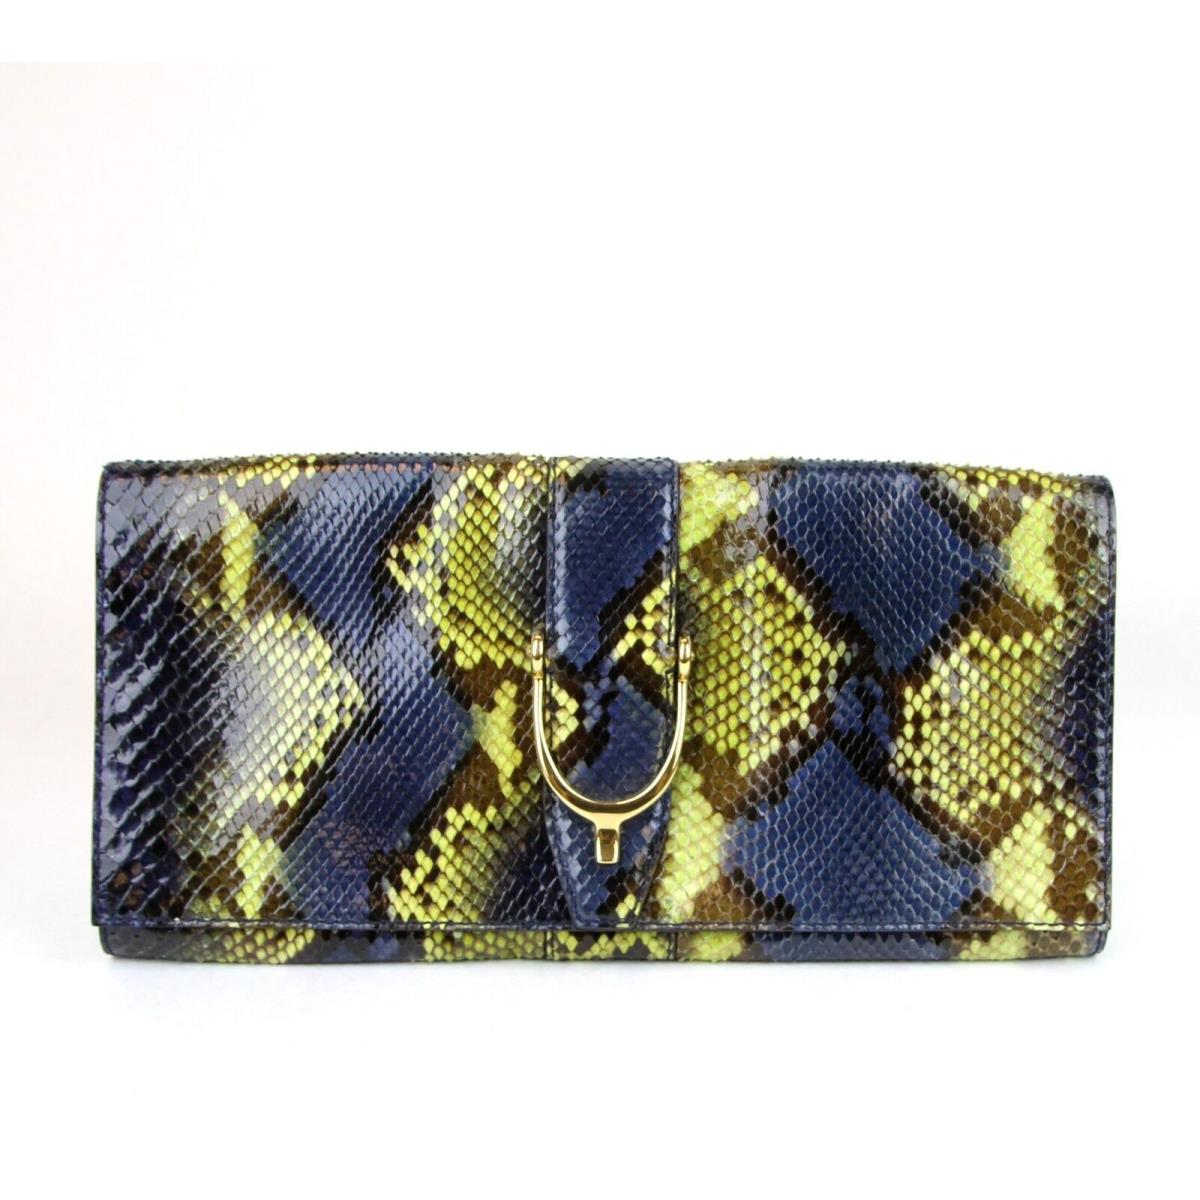 Gucci Soft Stirrup Python Clutch Evening Bag Large 304719 Multi Color/4293